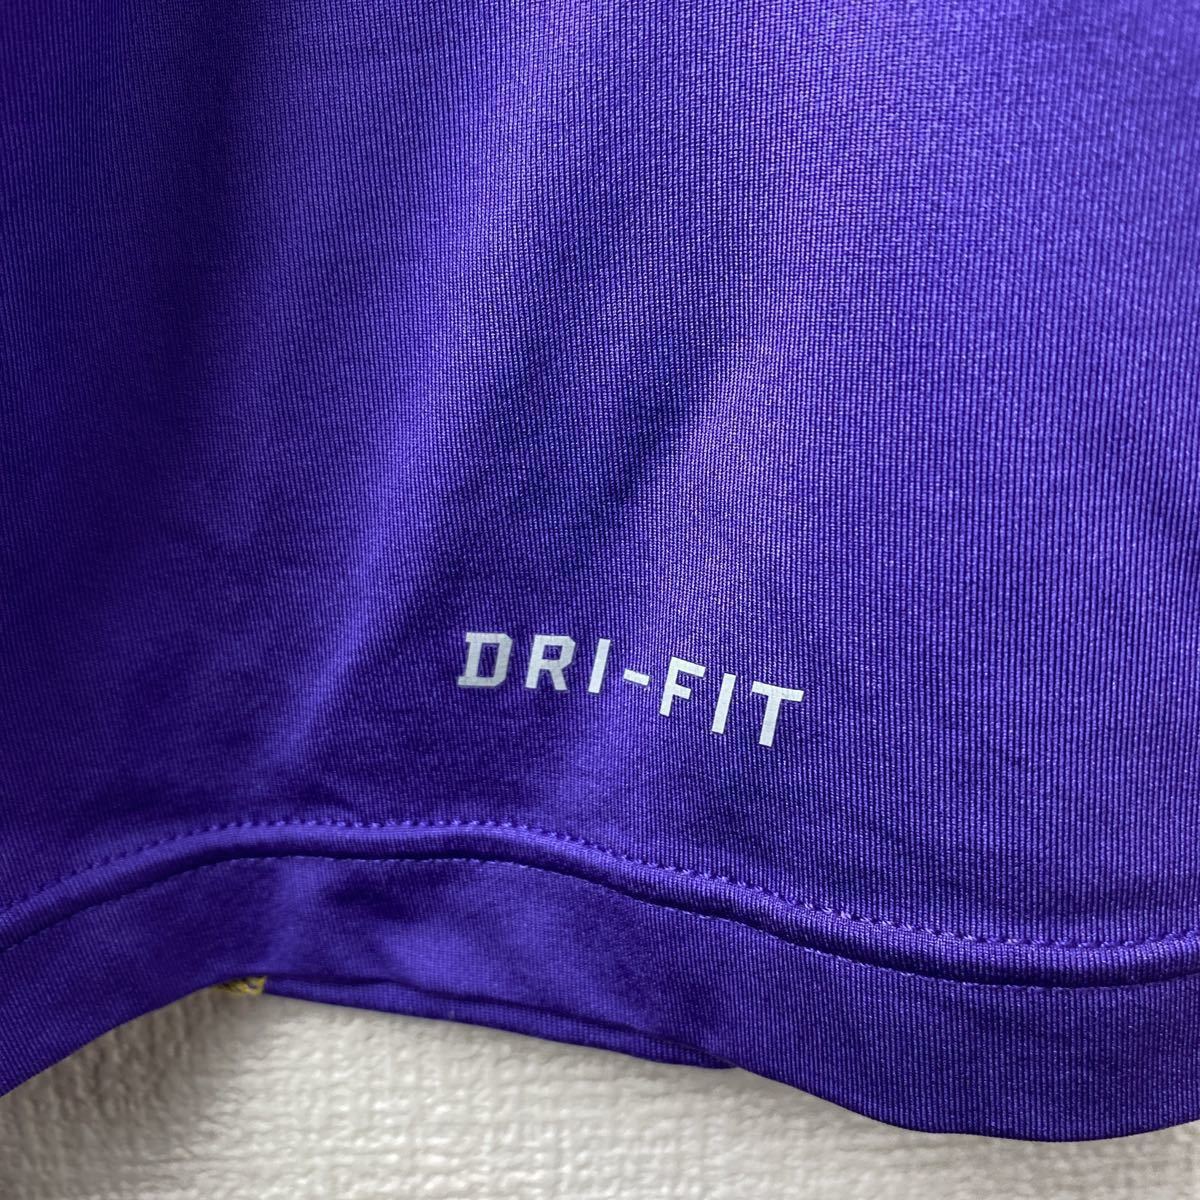 NIKE プロ コンバット コンプレッションインナー シャツ XL 長袖 紫 ドライフィット DRI-FIT PRO COMBAT